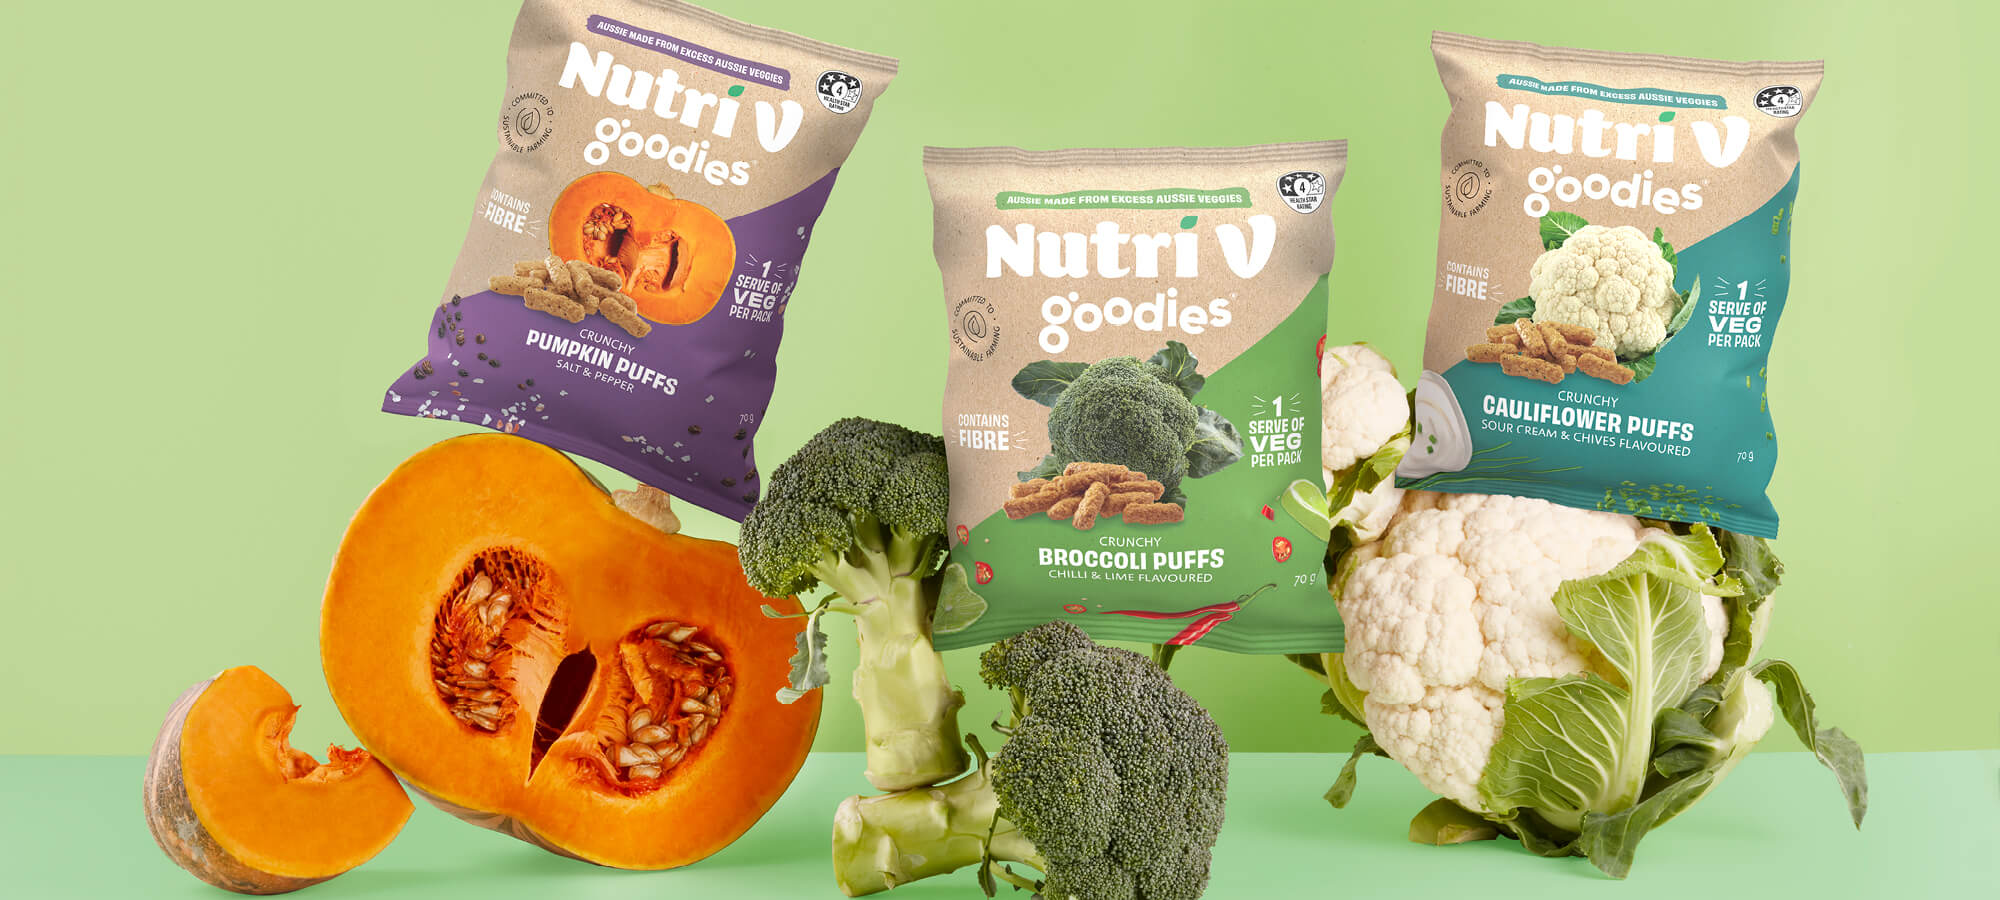 NutriV Goodies packs with vegetables